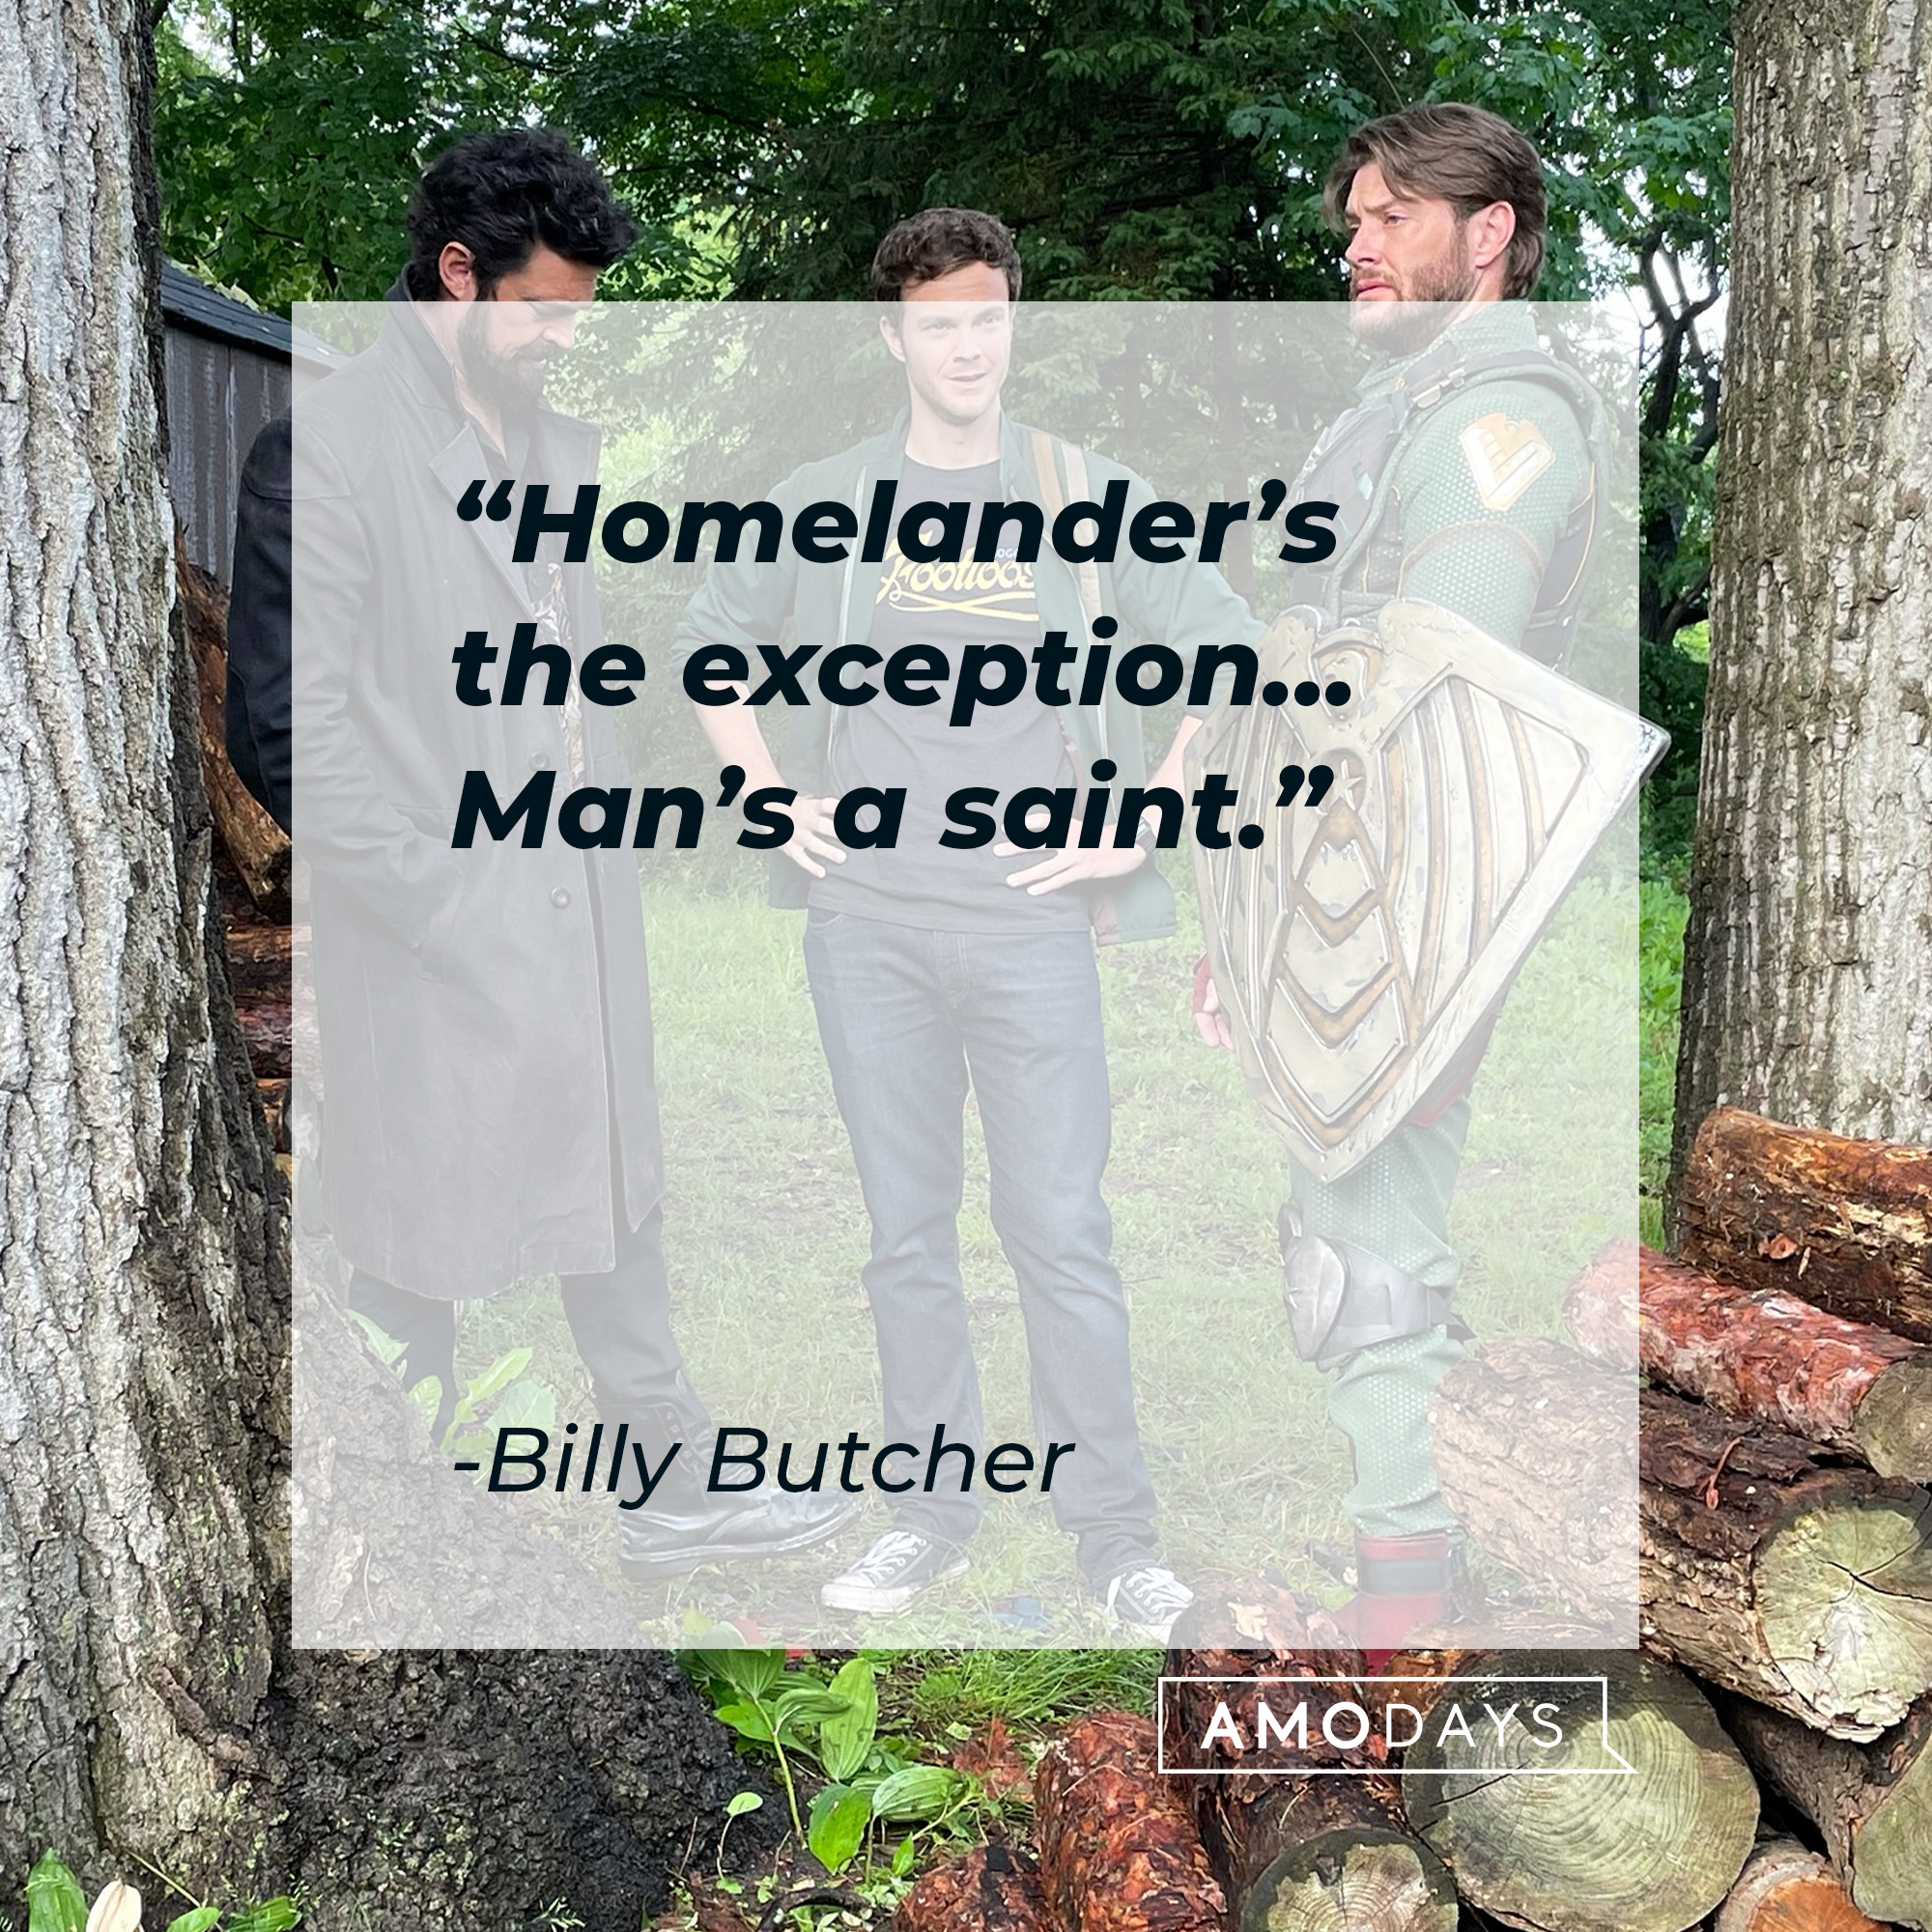 Billy Butcher's quote: "Homelander's the exception...Man's saint." | Source: Facebook.com/TheBoysTV